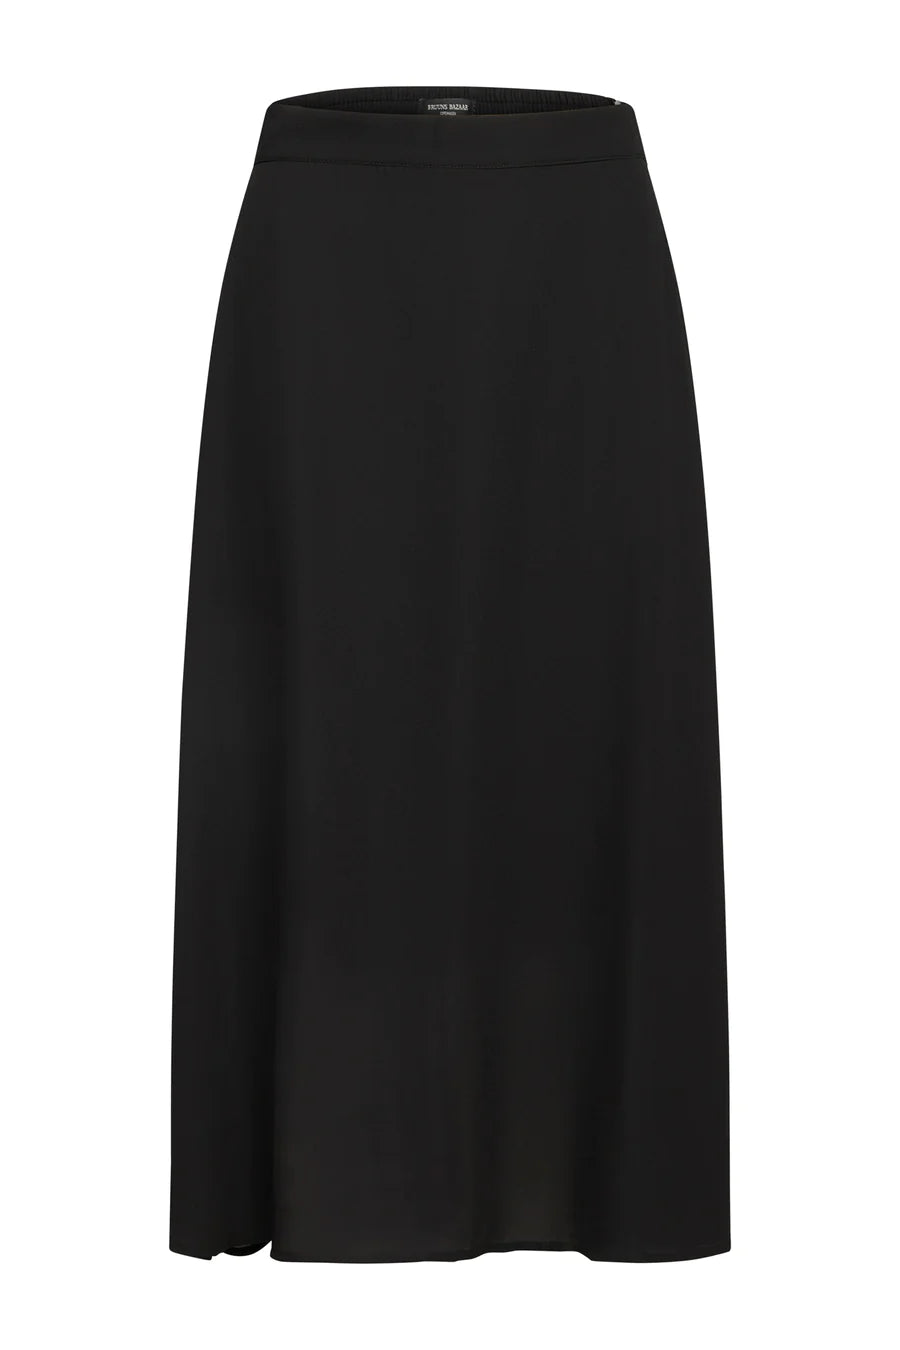 CamillaBBAras skirt - Black